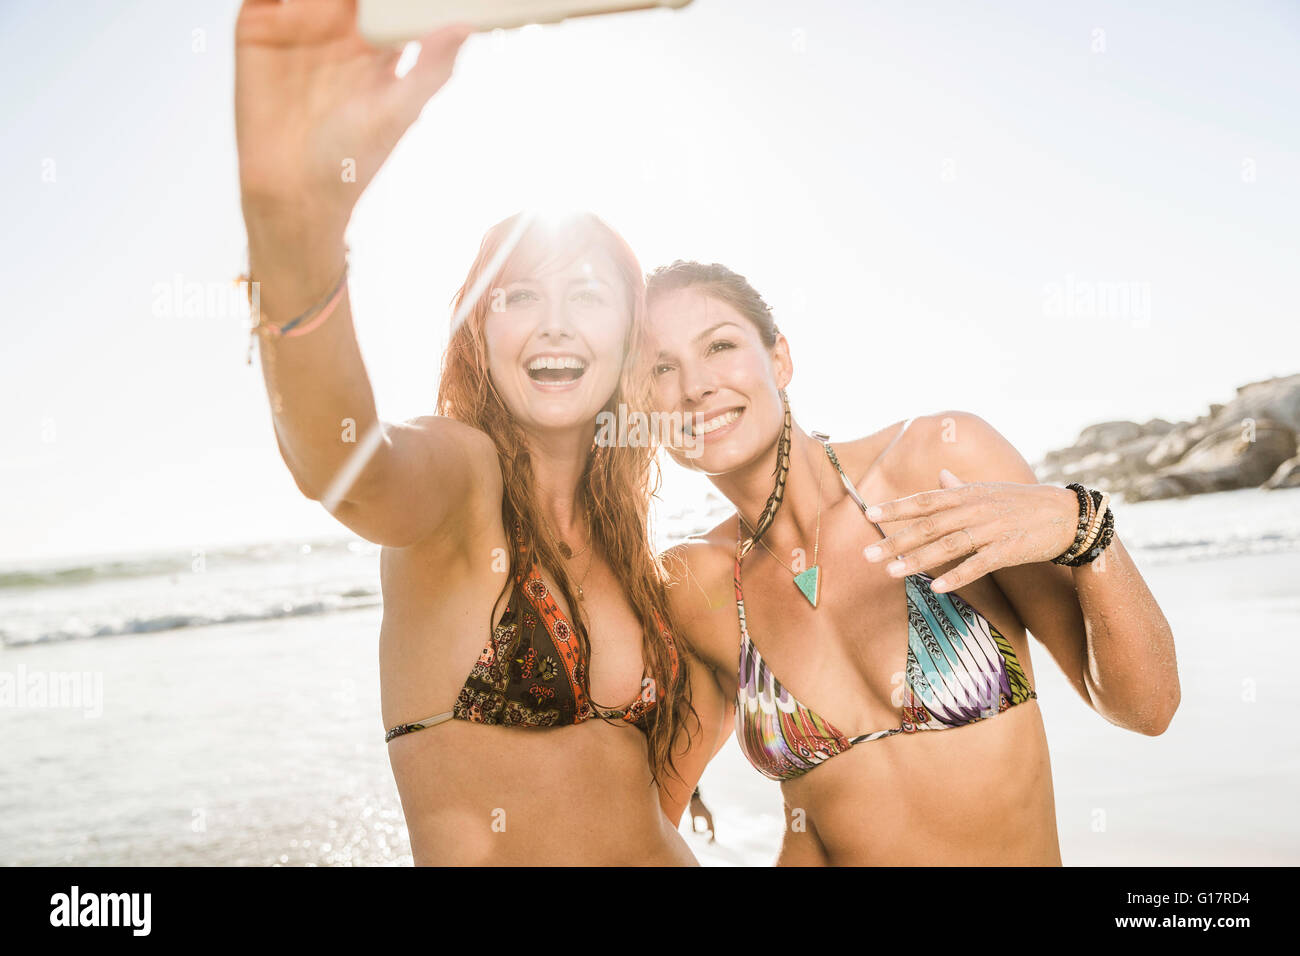 Bikini tops hi-res stock photography and images